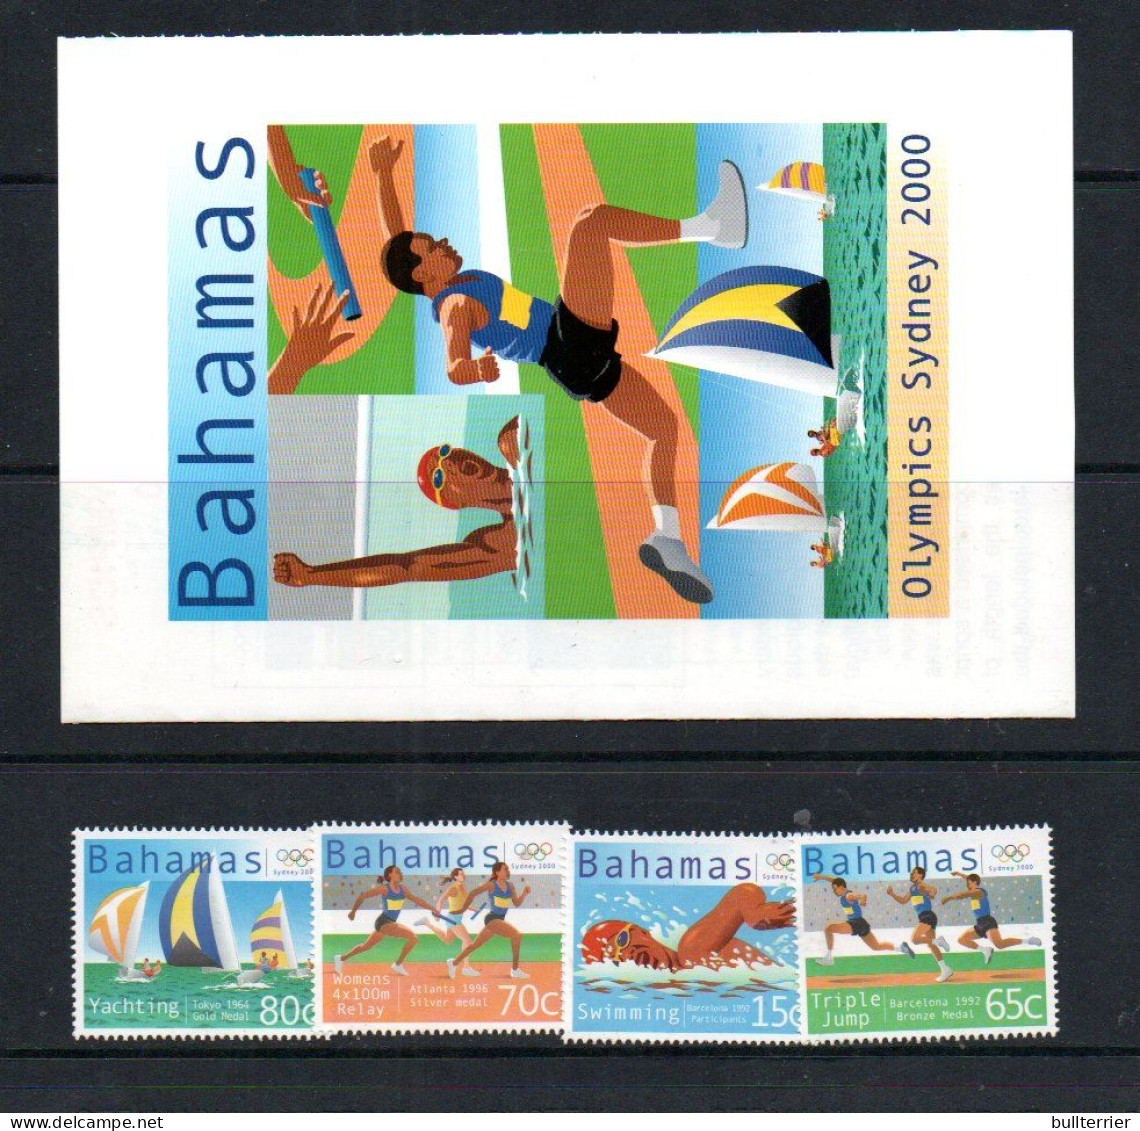 OLYMPICS -  BAHAMAS  - 2000-Sydney Olympics Set Of 4 + PUBLICITY Sheet  Mint Never Hinged - Ete 2000: Sydney